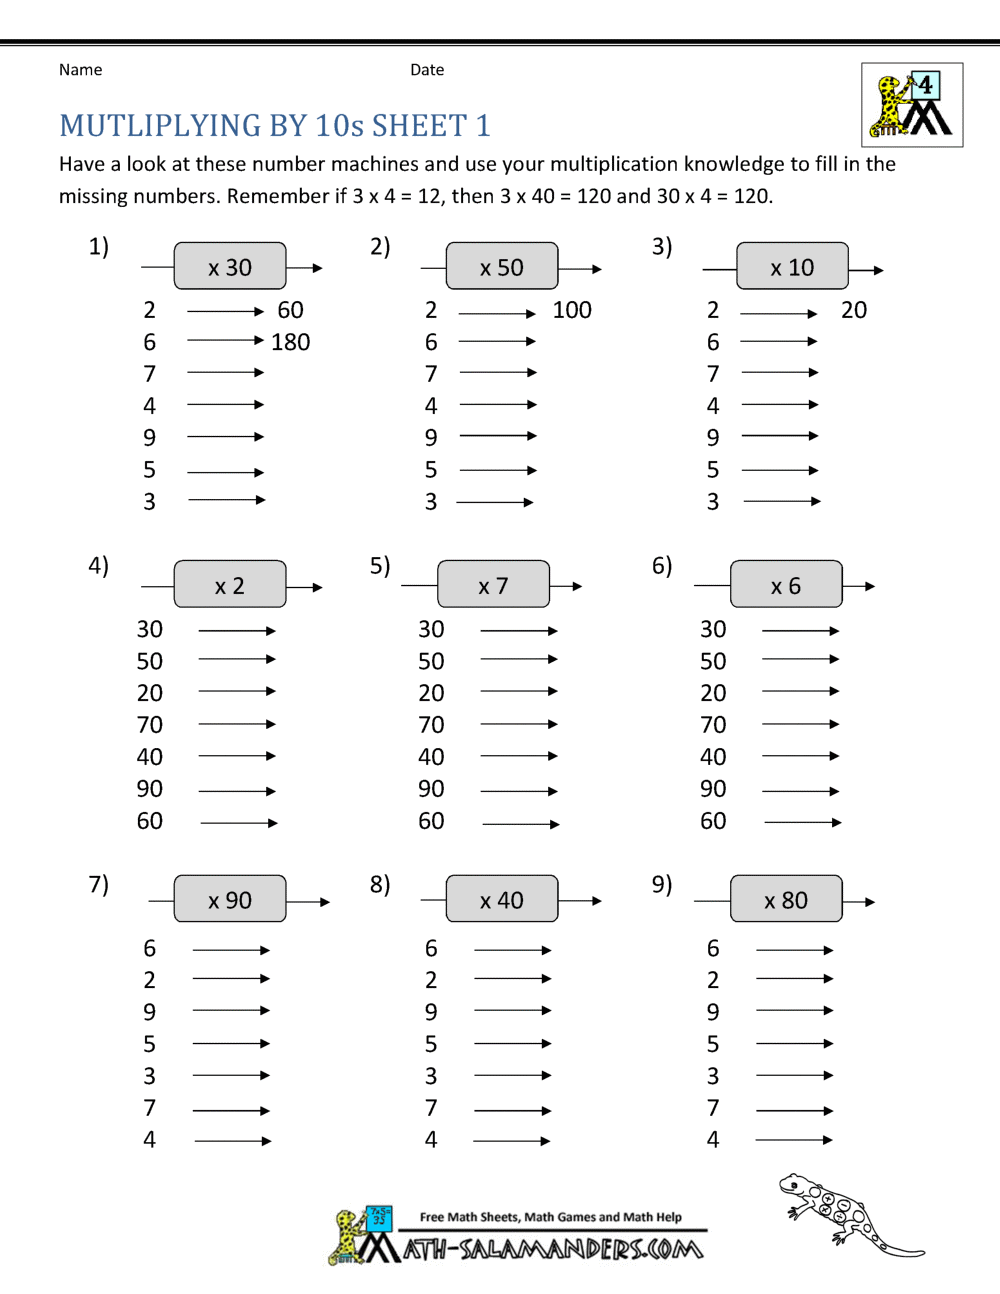 multiplication-worksheets-4-digits-by-2-printable-multiplication-flash-cards